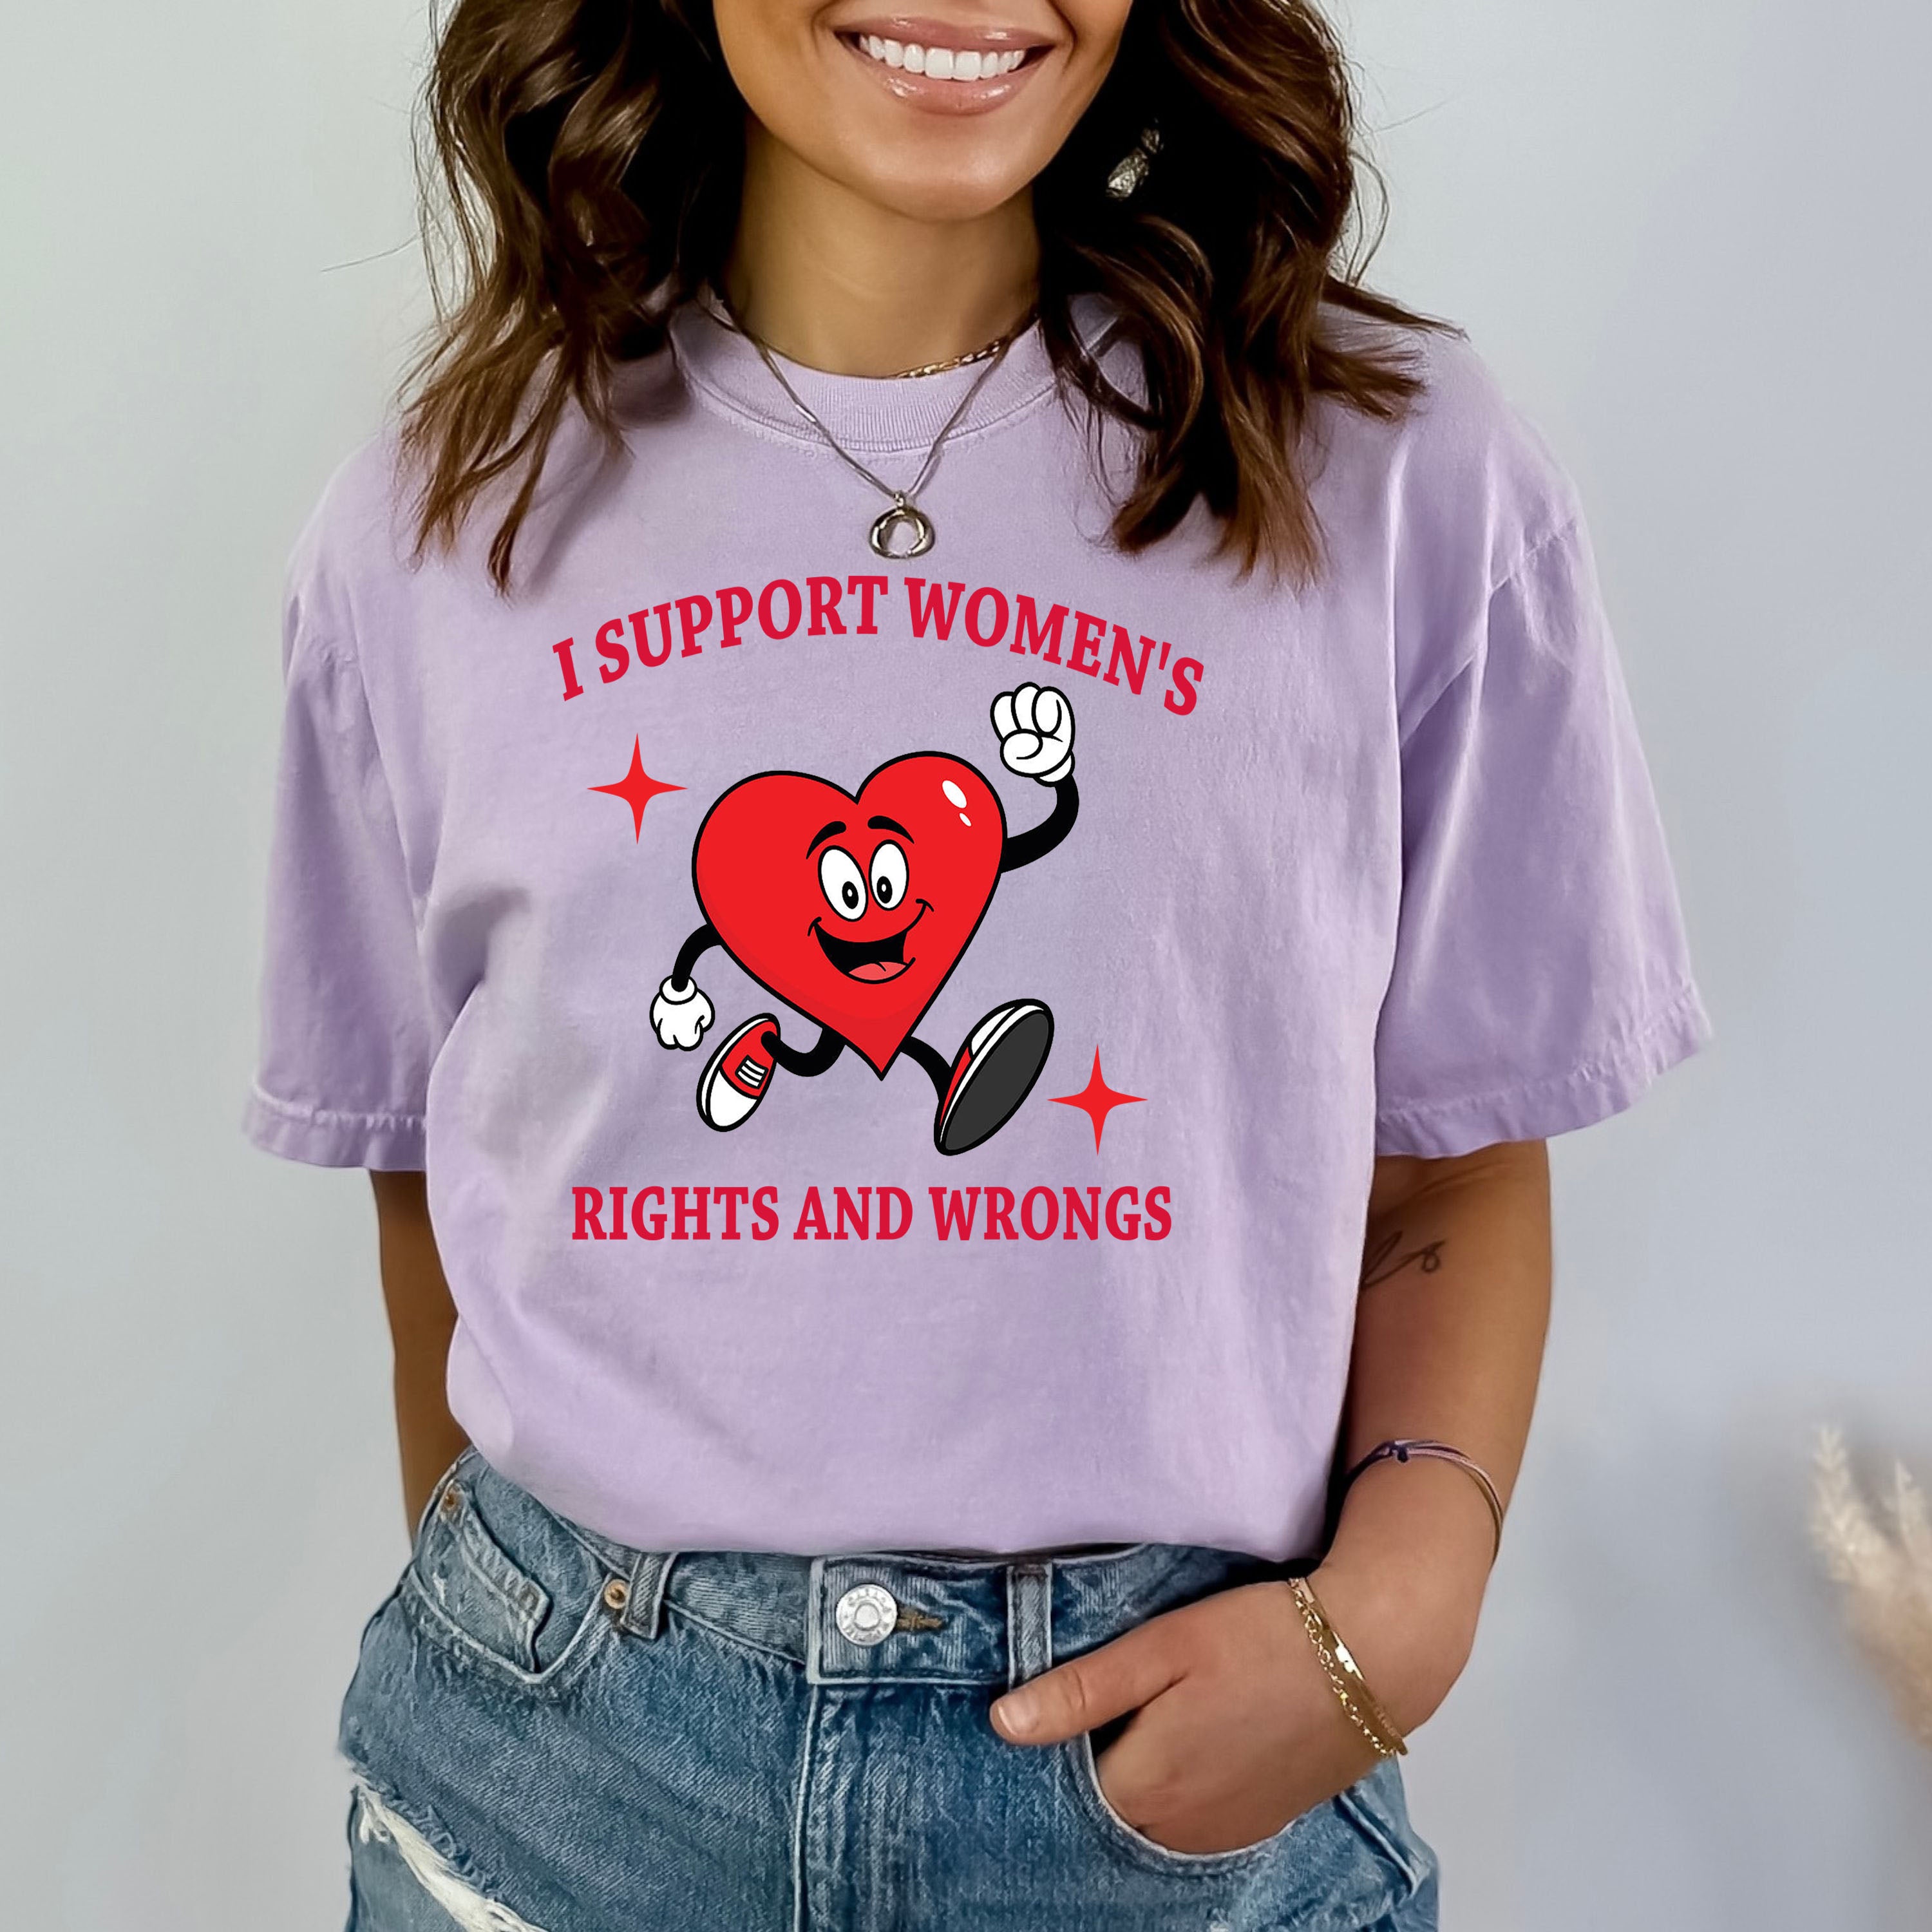 I Support Women - Bella canvas